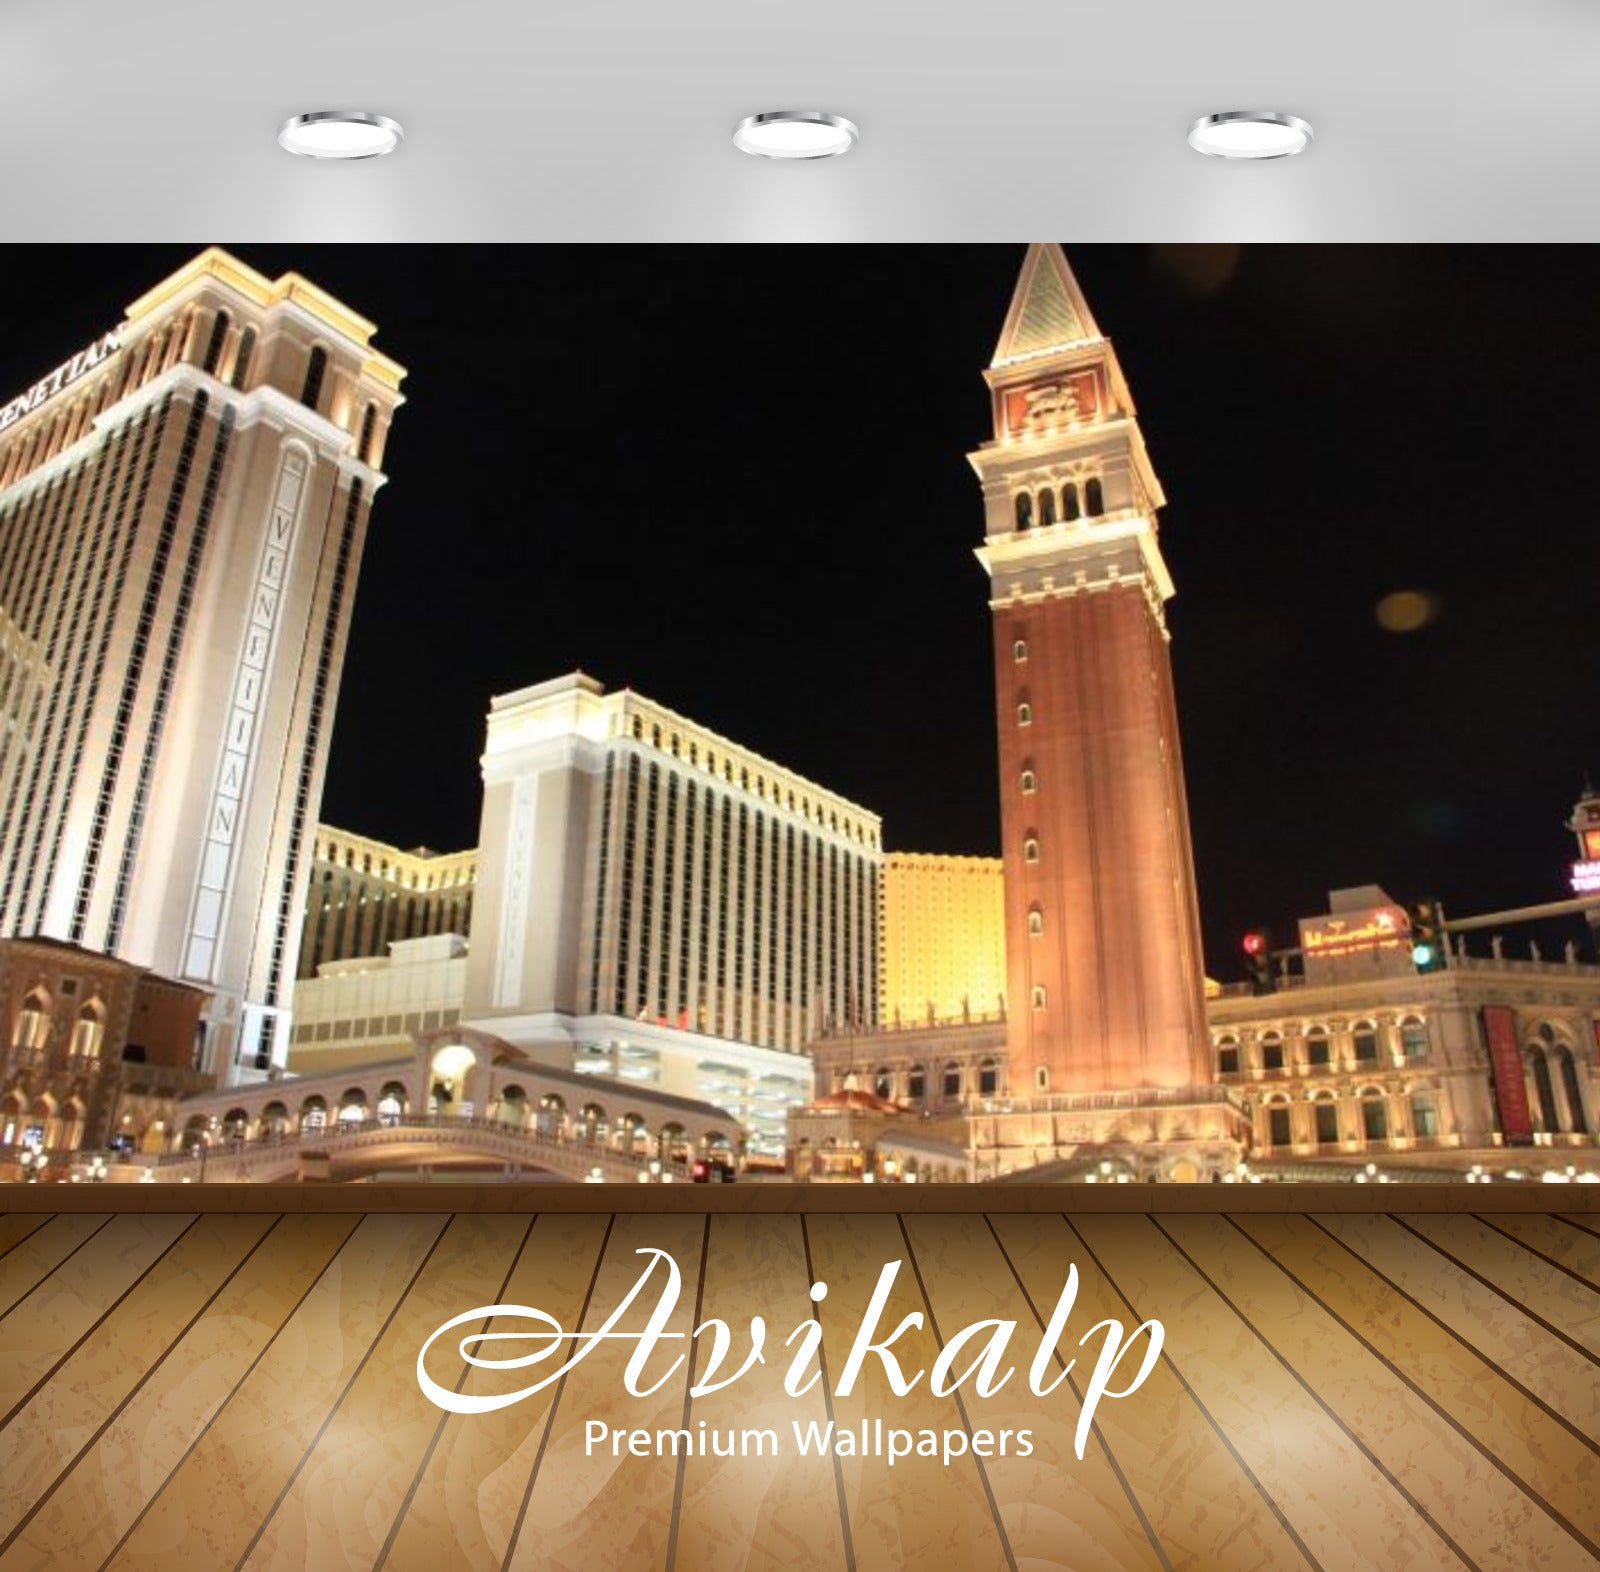 Avikalp Exclusive Awi2853 Nevada United States Las Vegas Venetian Luxury Hotels Full HD Wallpapers f